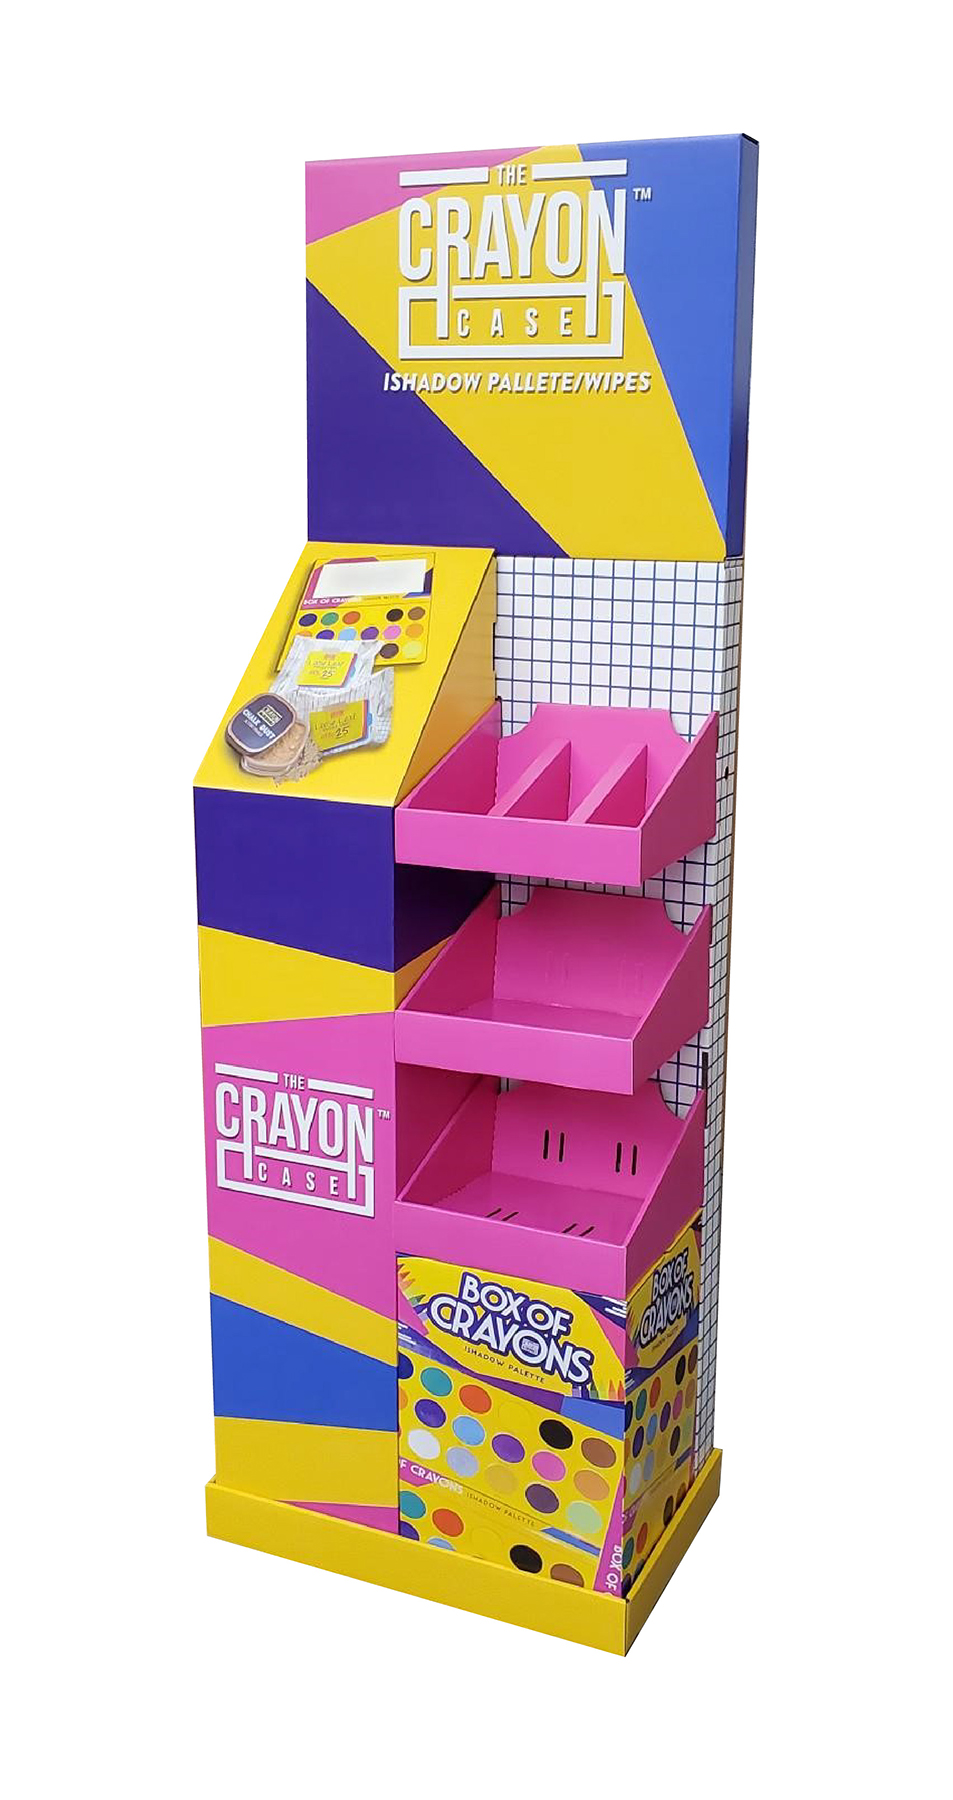 The Crayon Case - #BoxOfCrayonsPalette restock soon